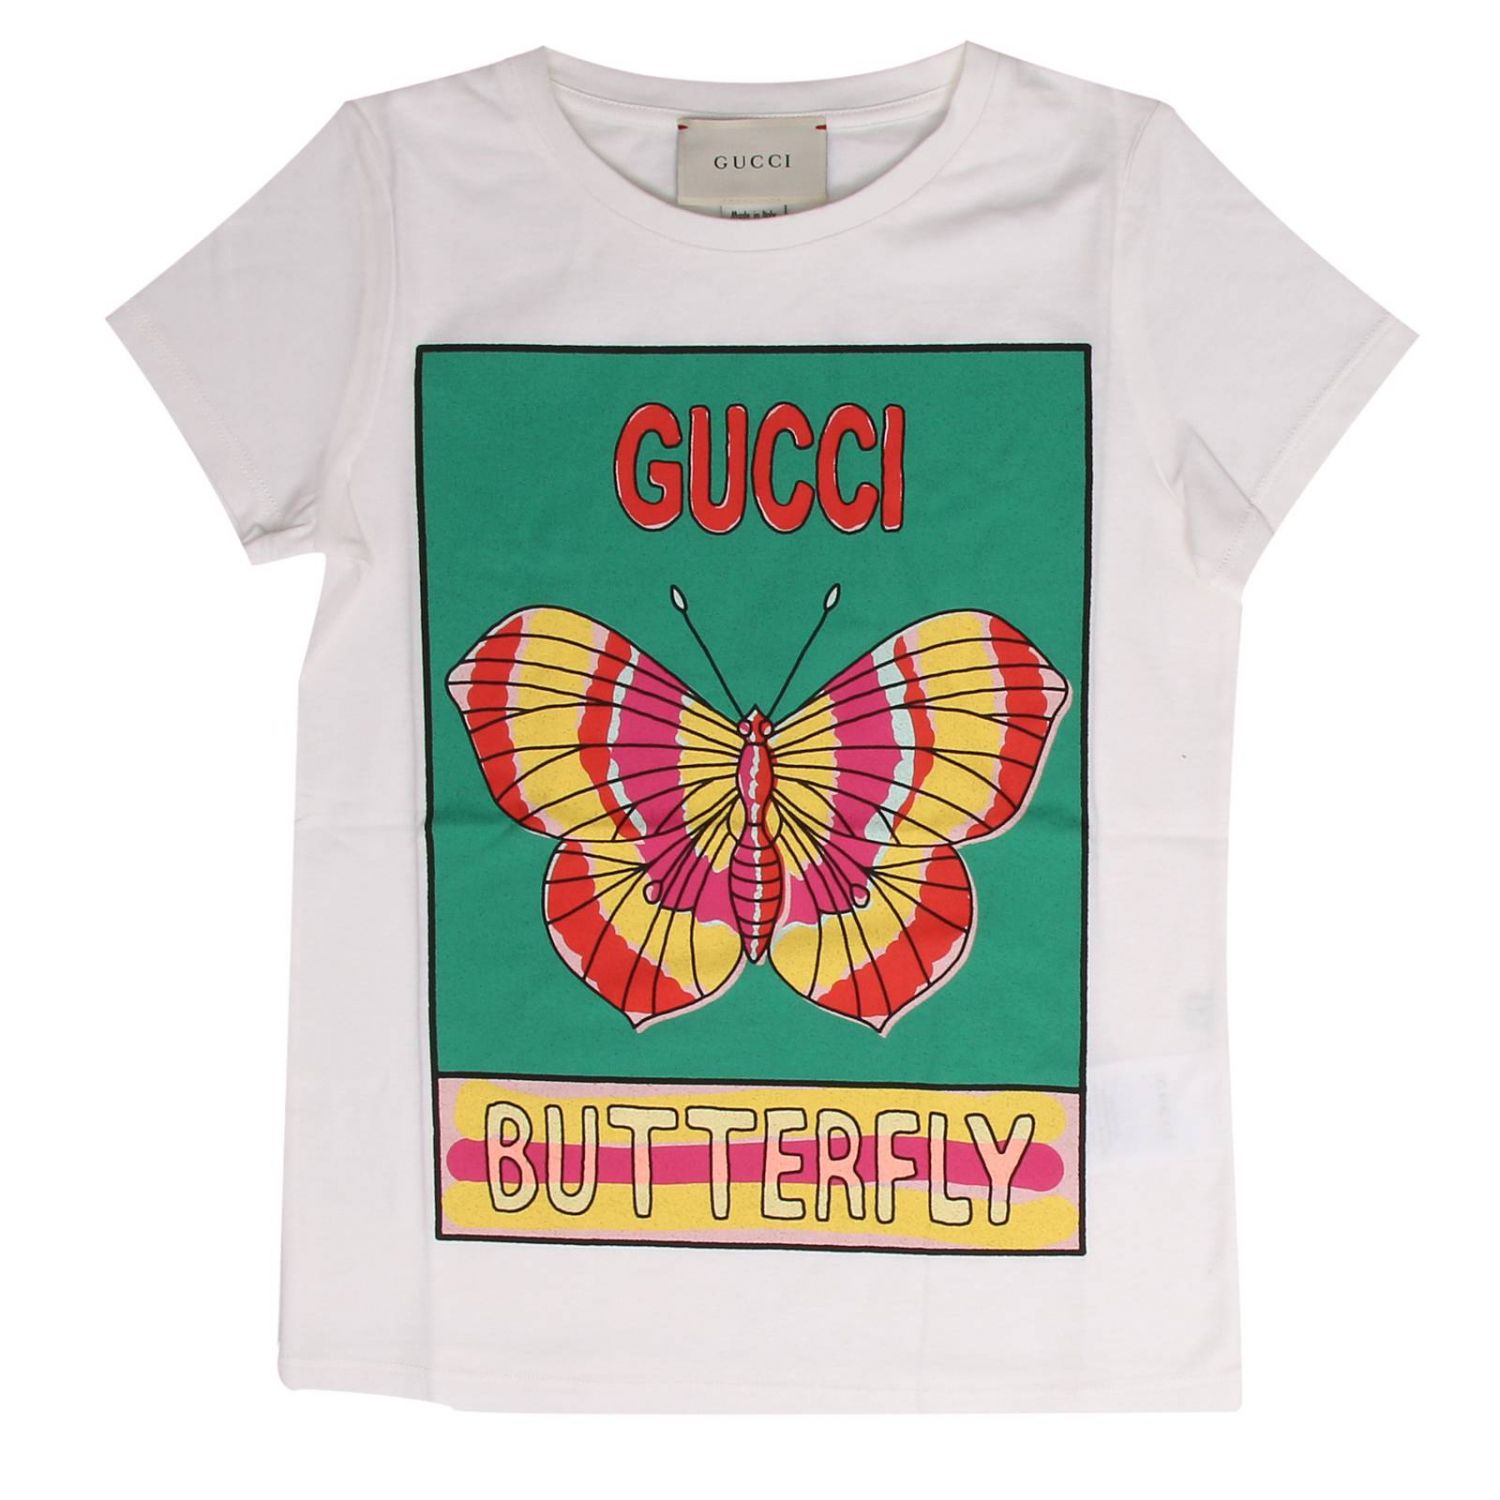 gucci butterfly t shirt